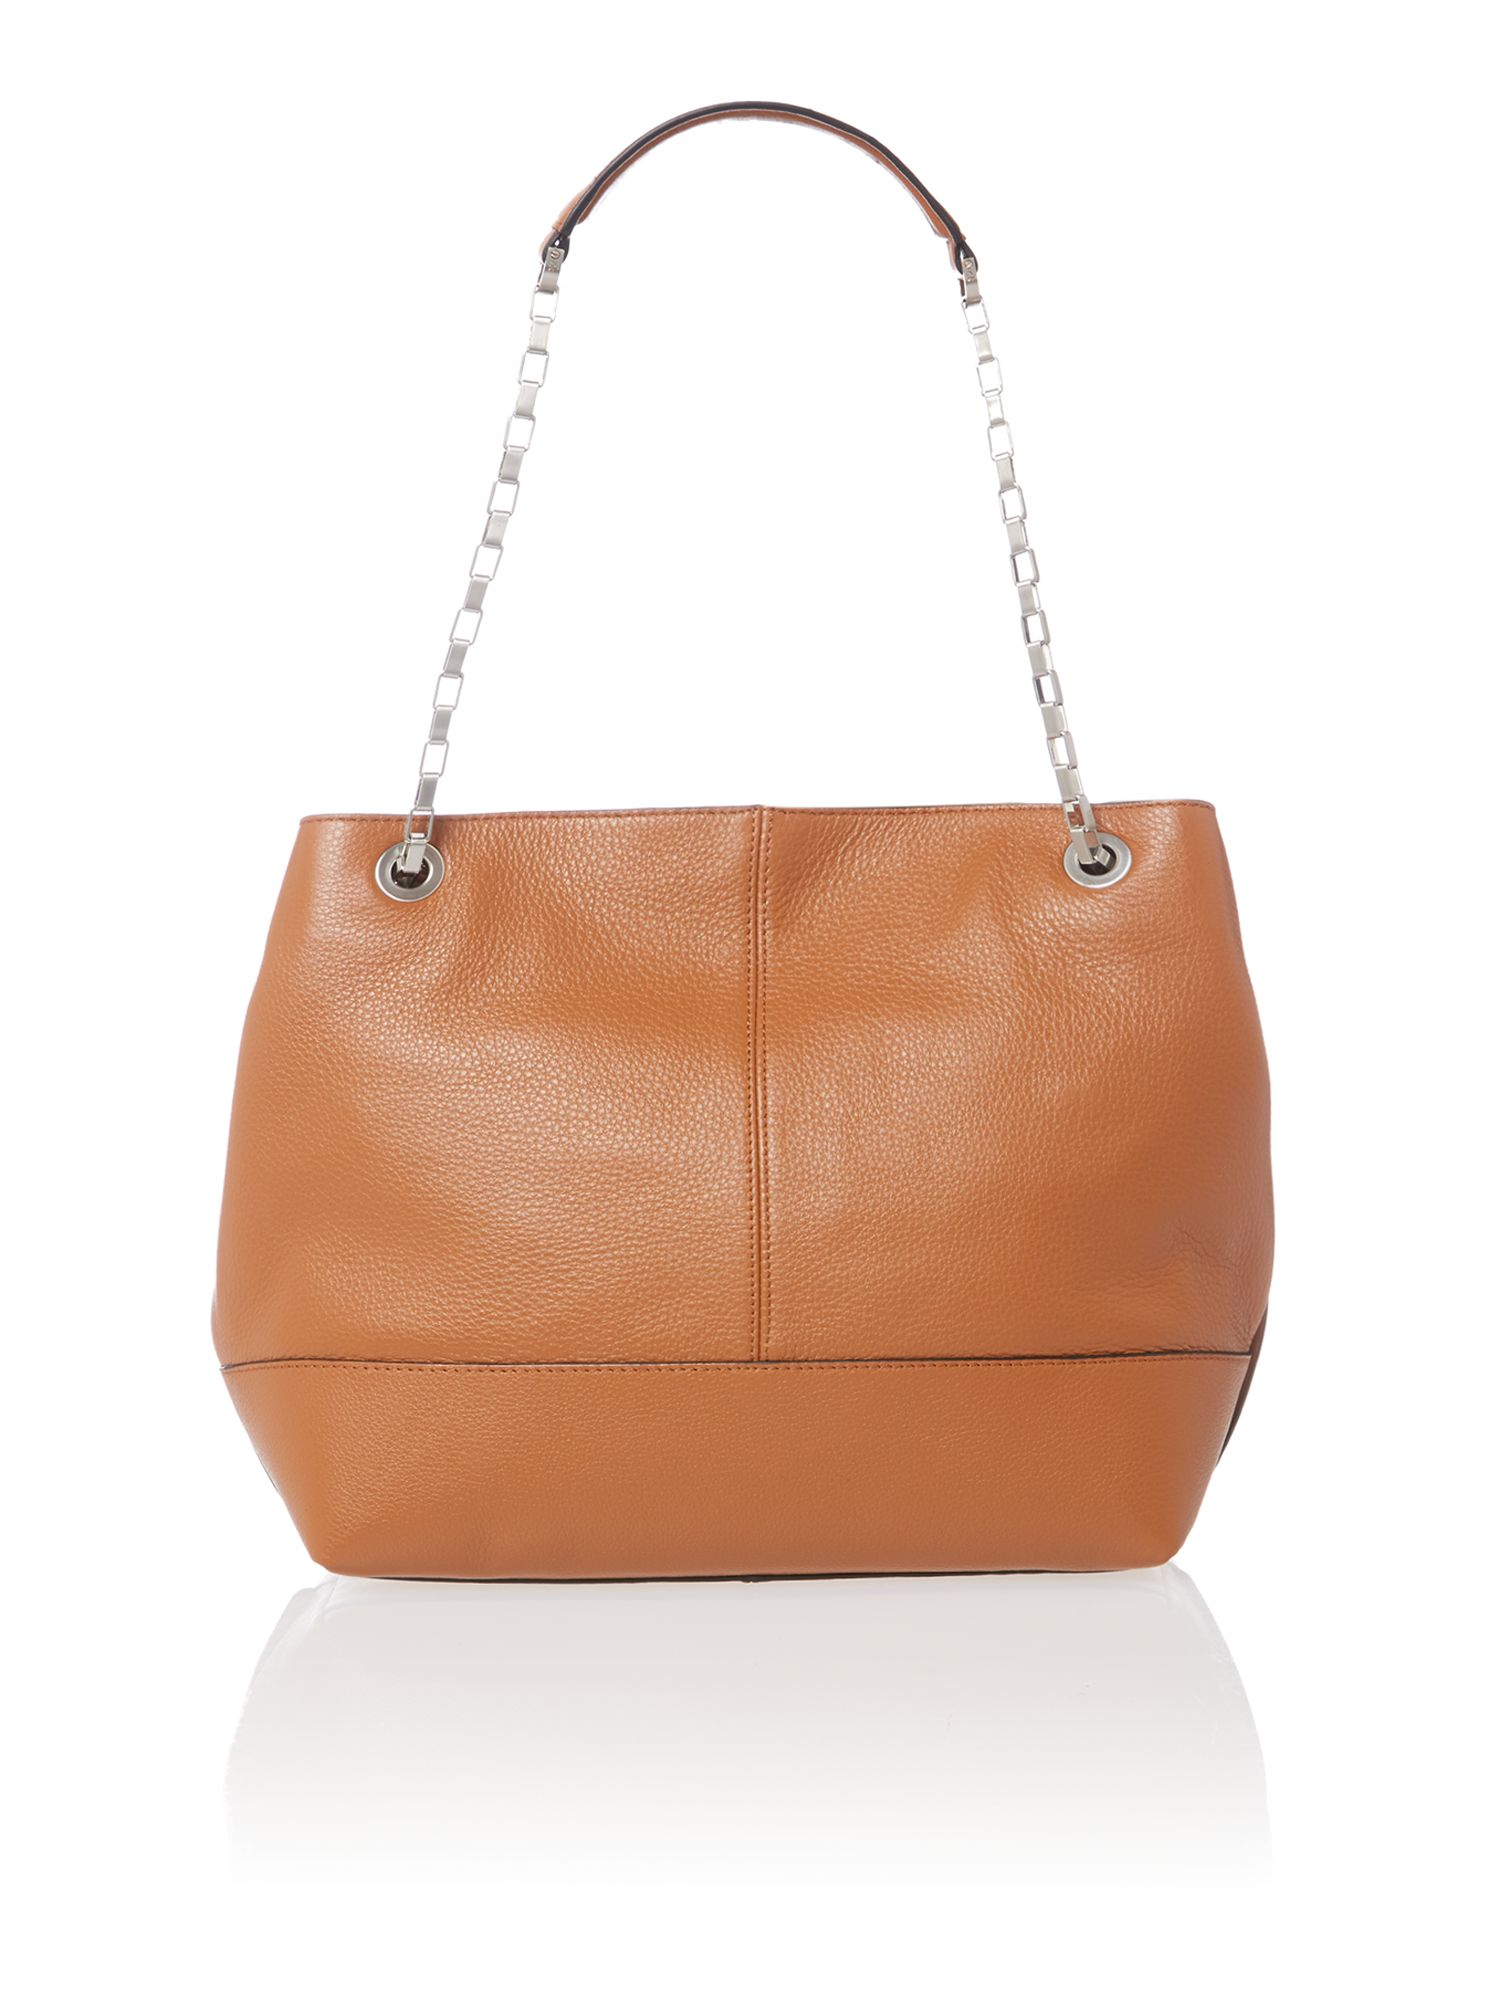 Calvin klein Renee Tan Small Chain Tote Bag in Brown (Tan) | Lyst